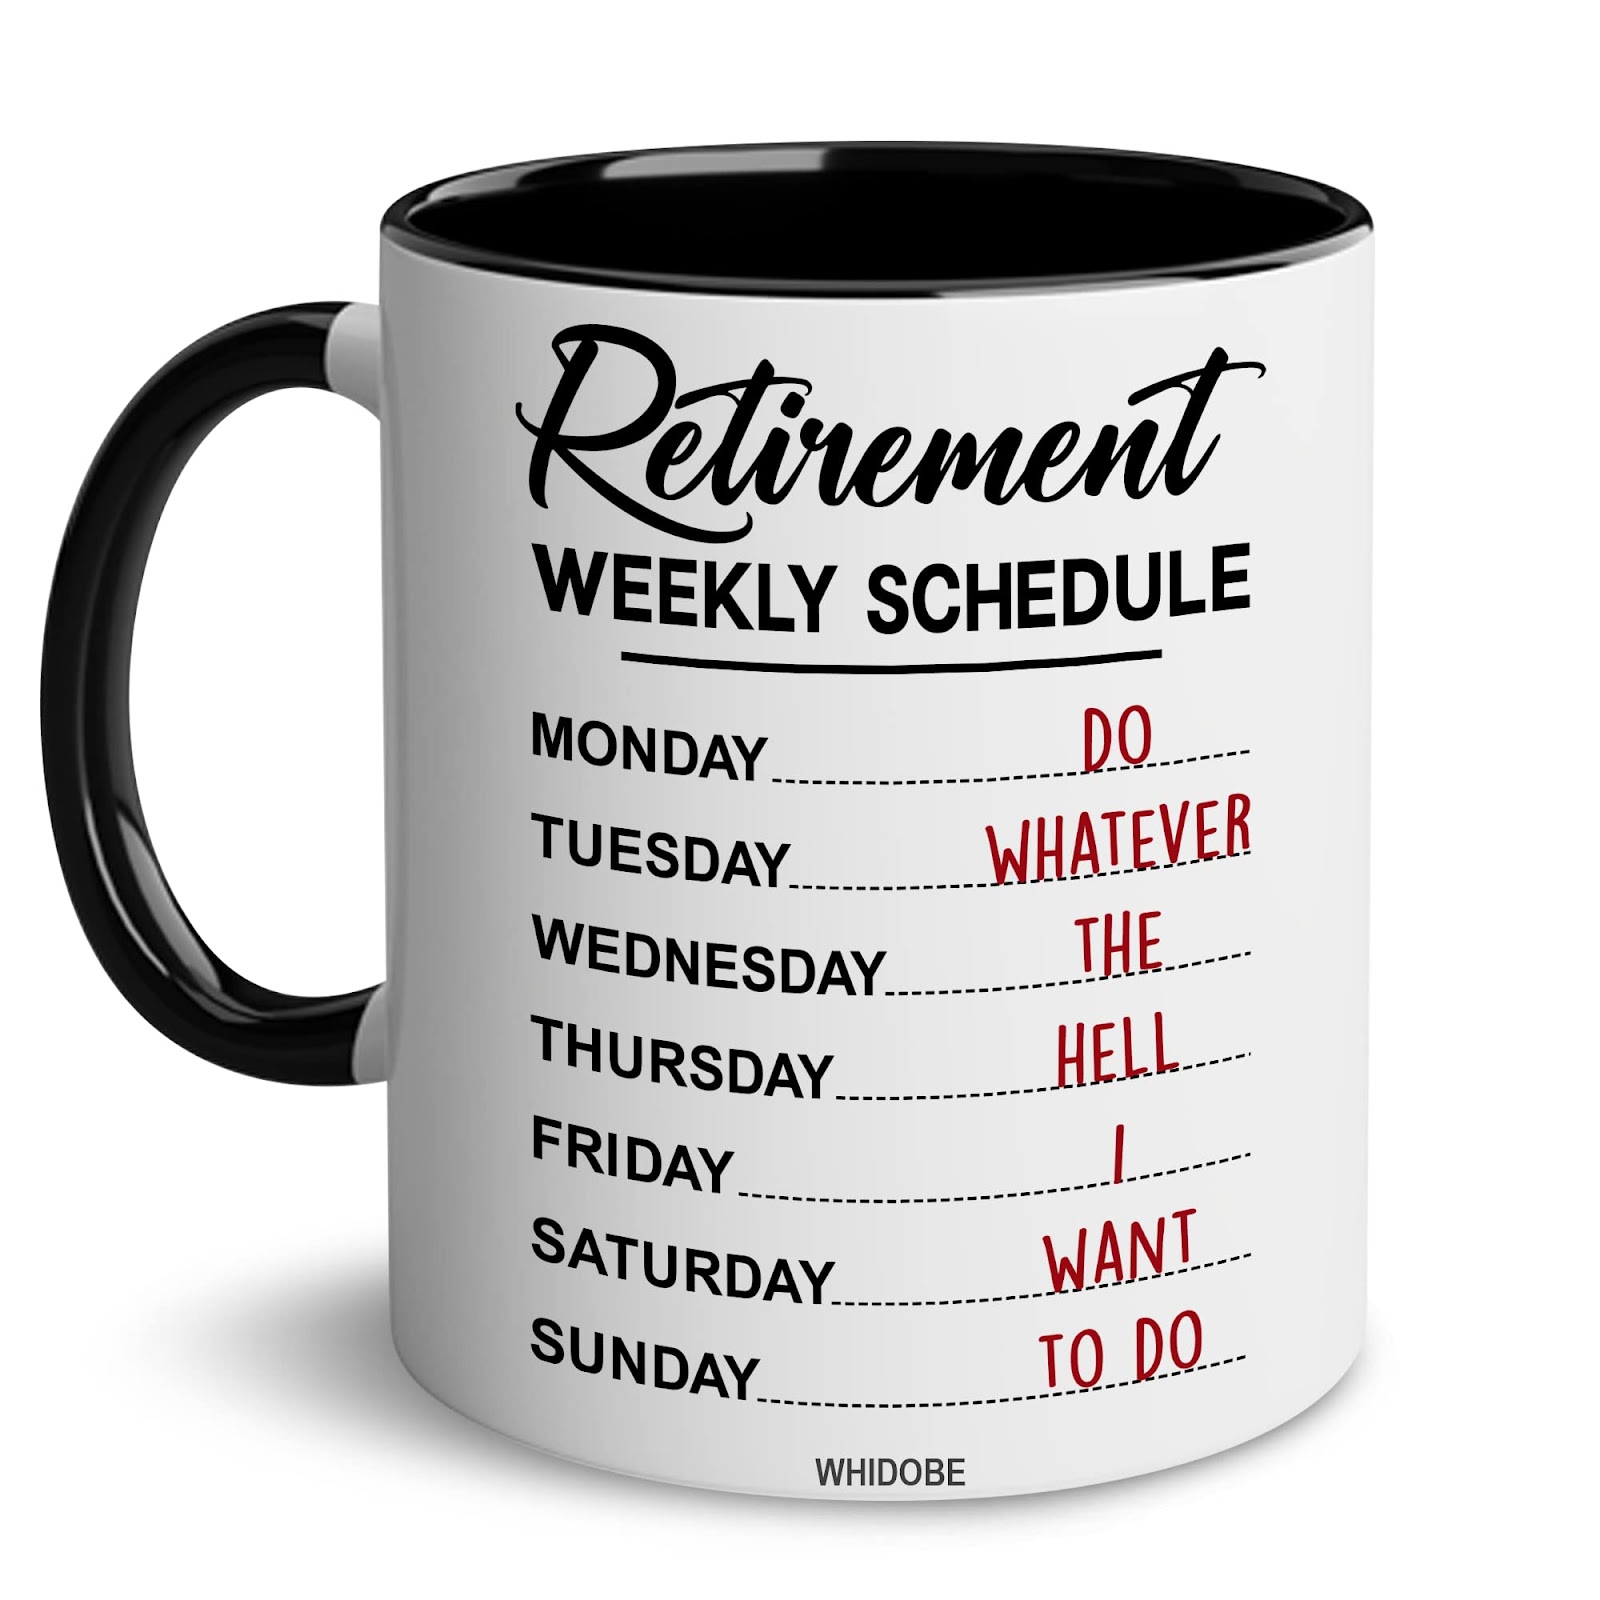 WHIDOBE Retirement Weekly Schedule Mug